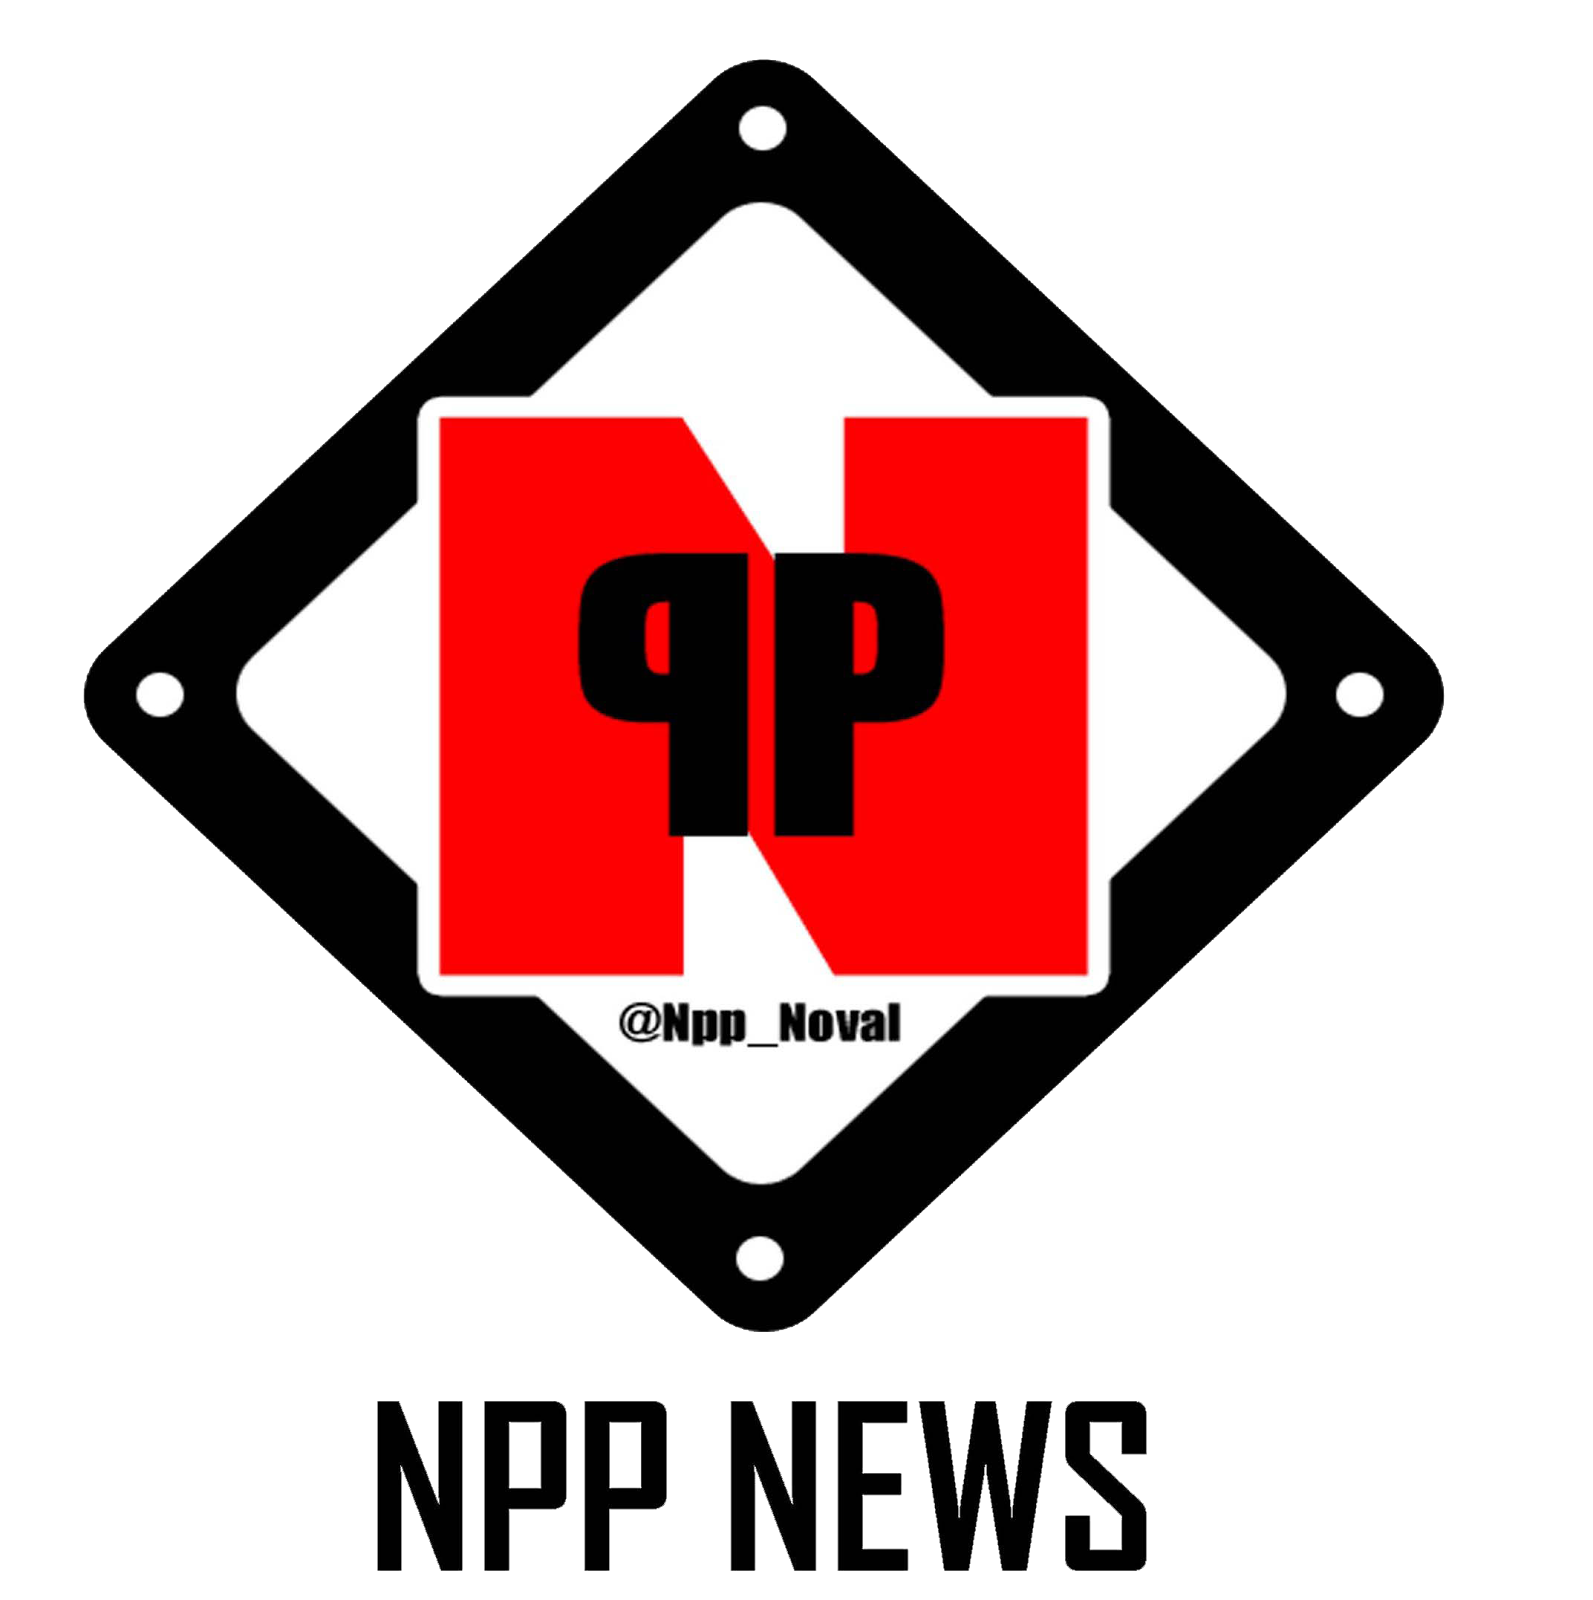 NPP NEWS